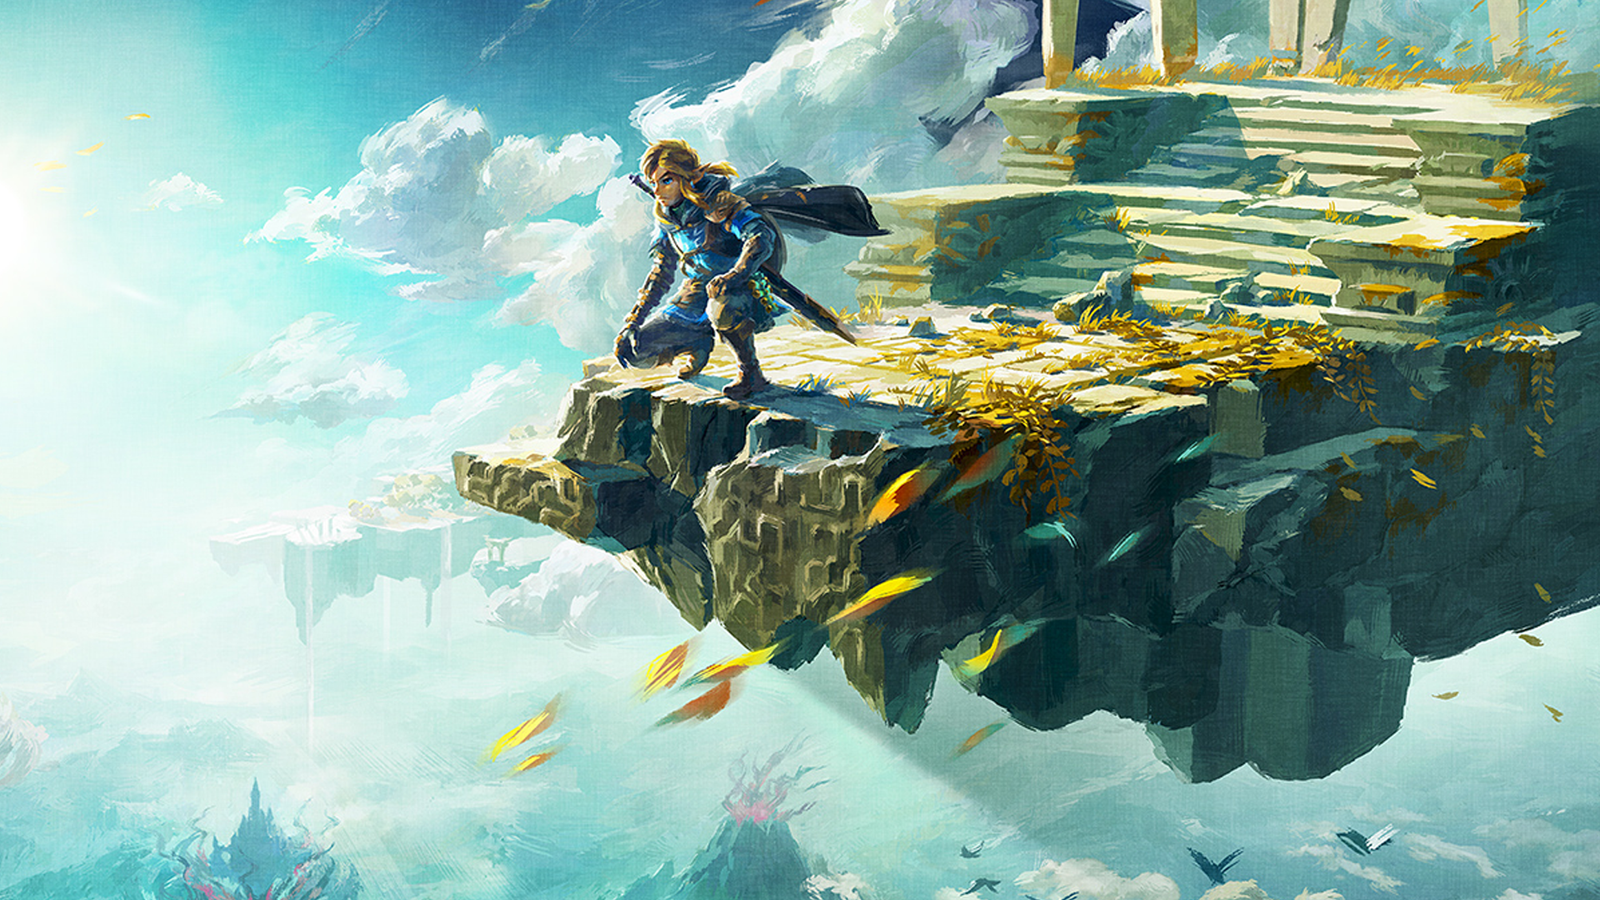 I love the look of this Zelda-inspired pixel art game